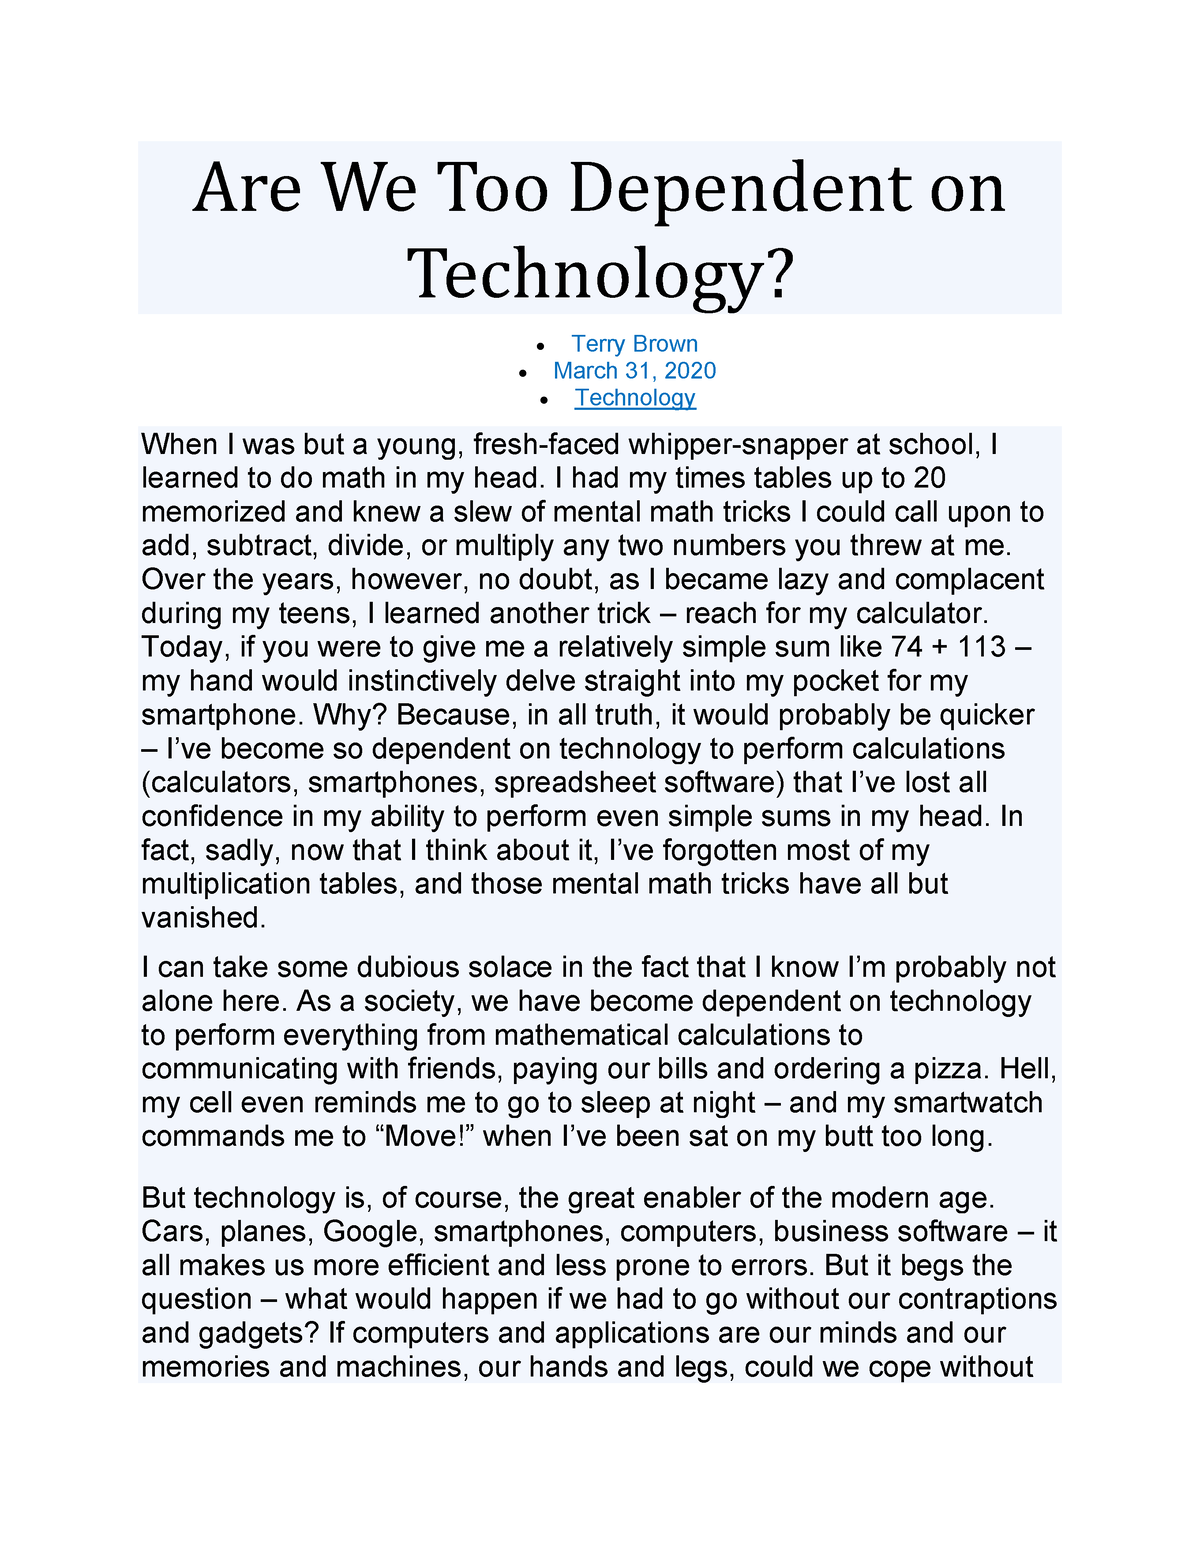 technology dependence essay